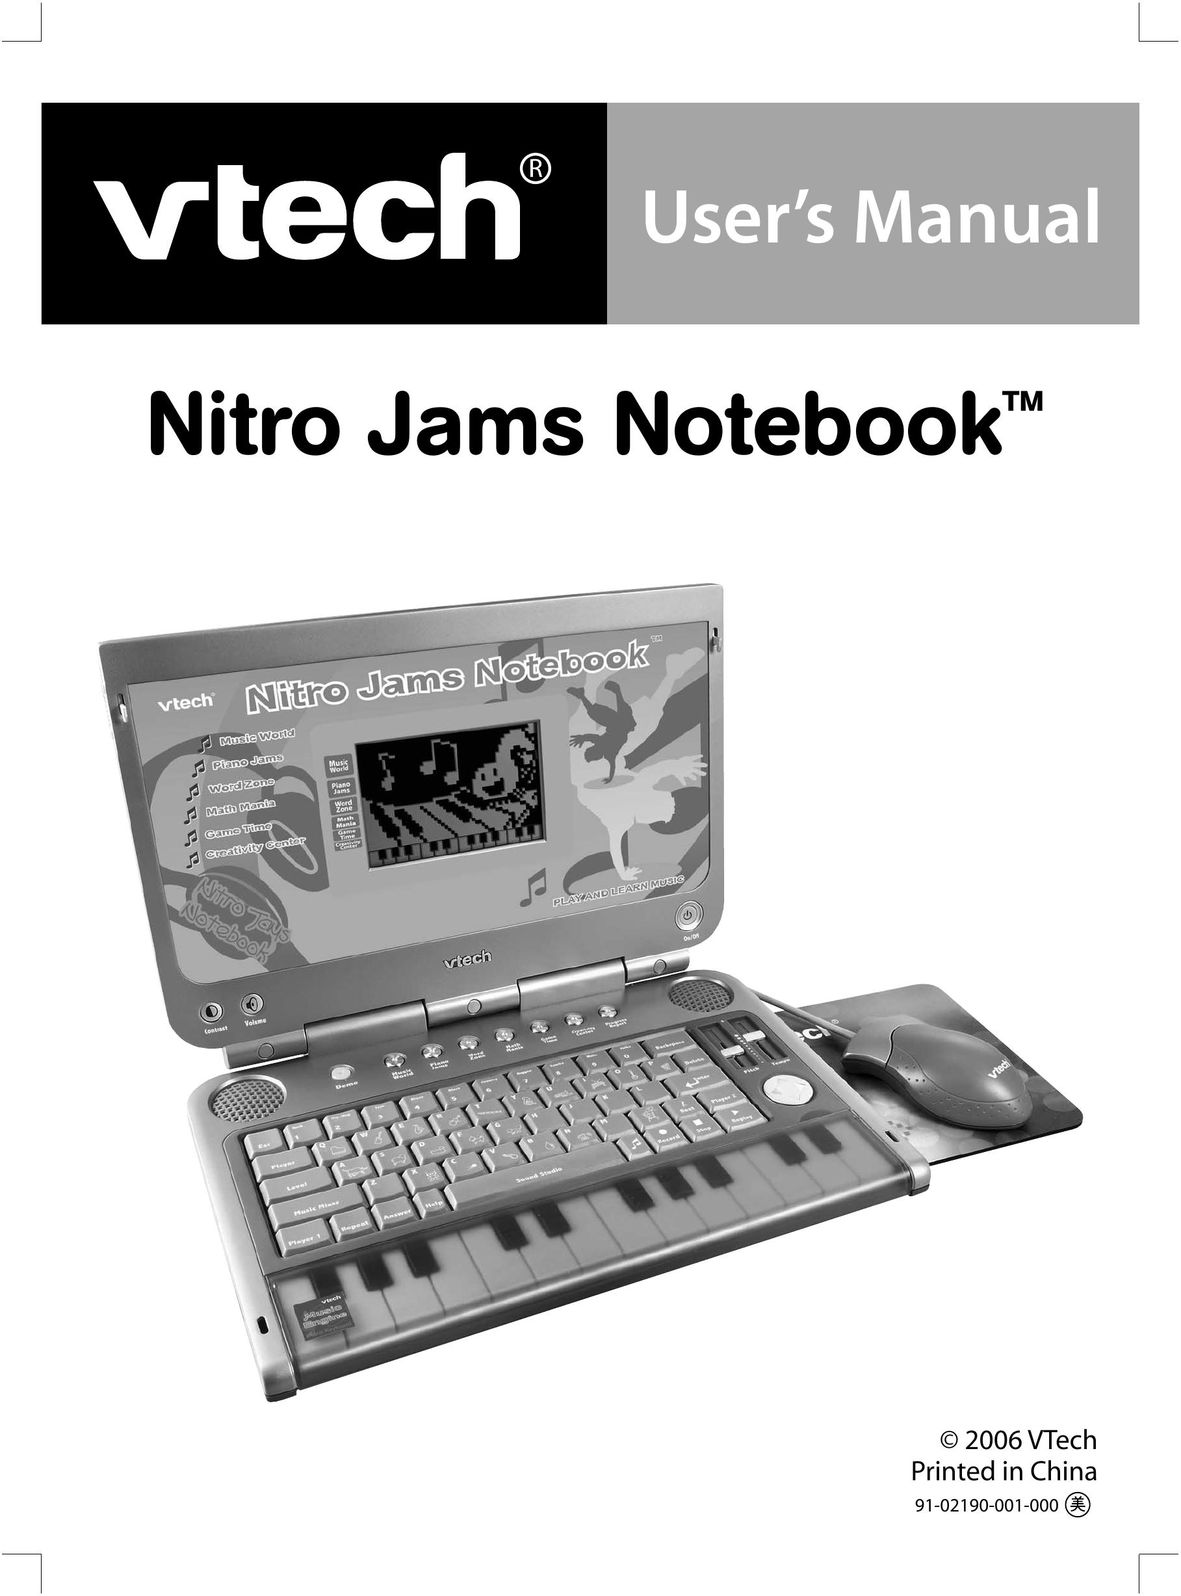 VTech Nitro Jams Notebook Laptop User Manual